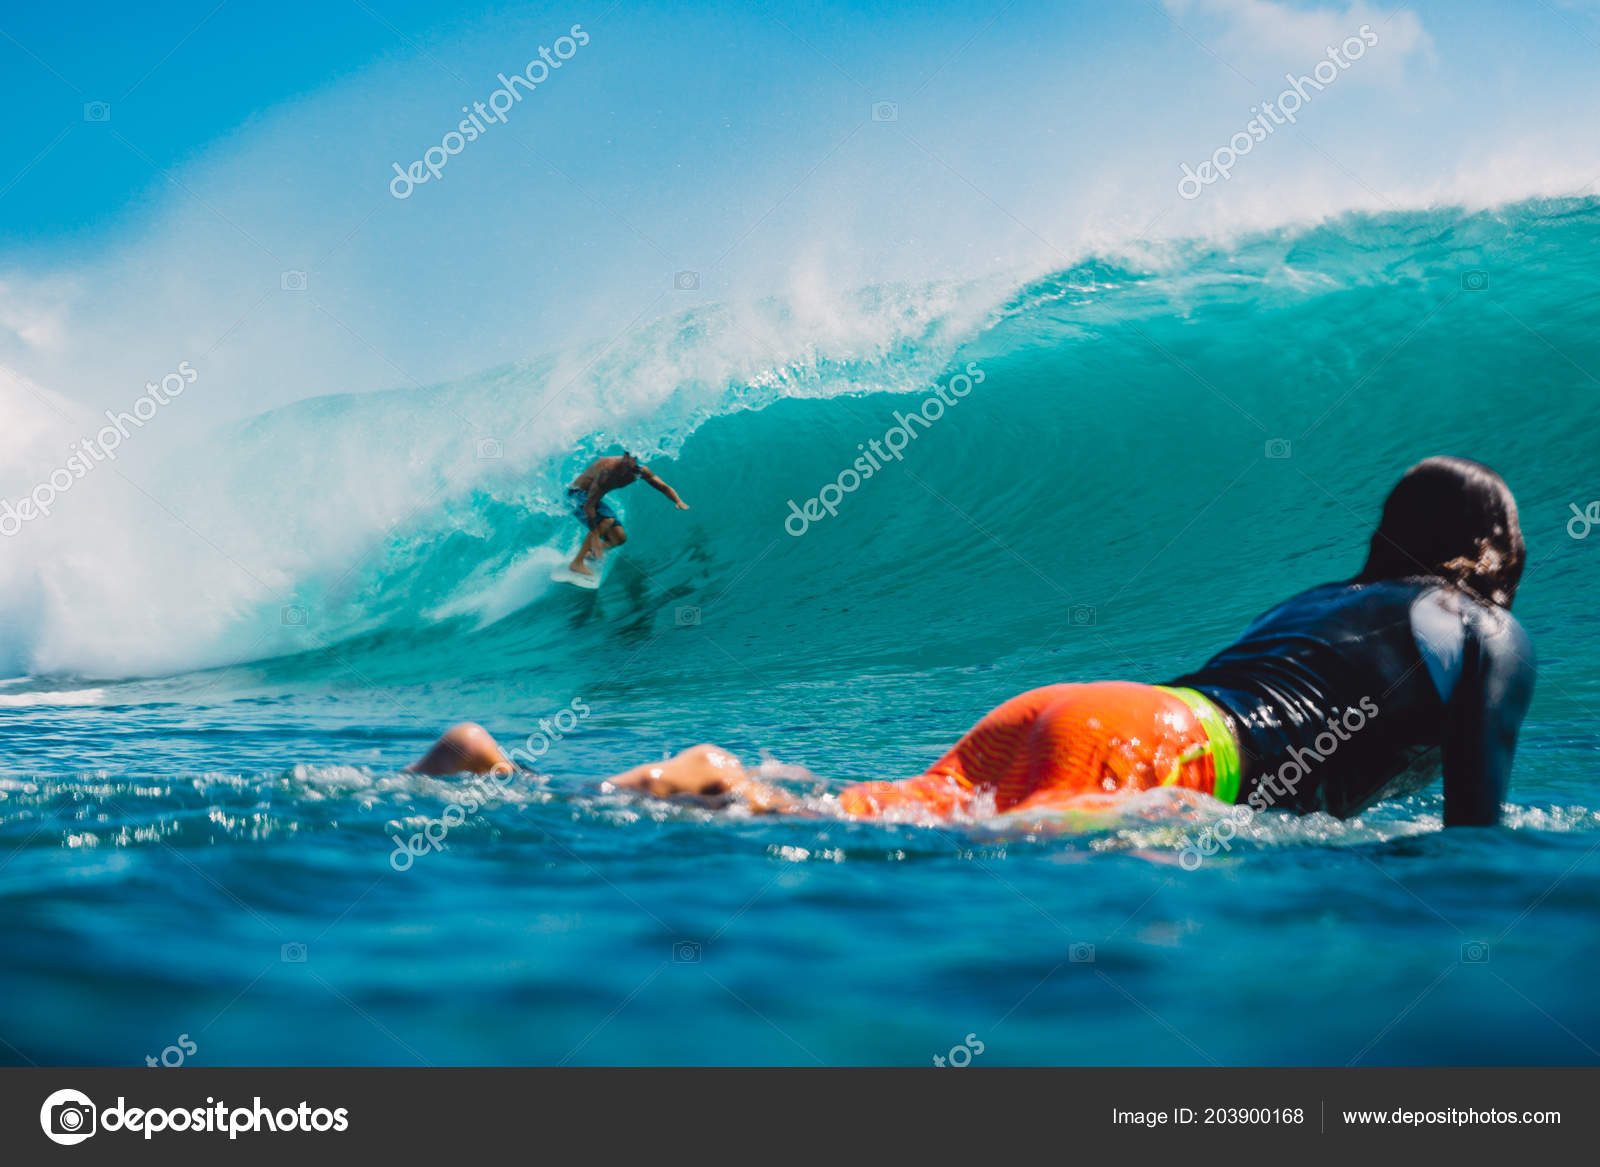 download surfer 7 free